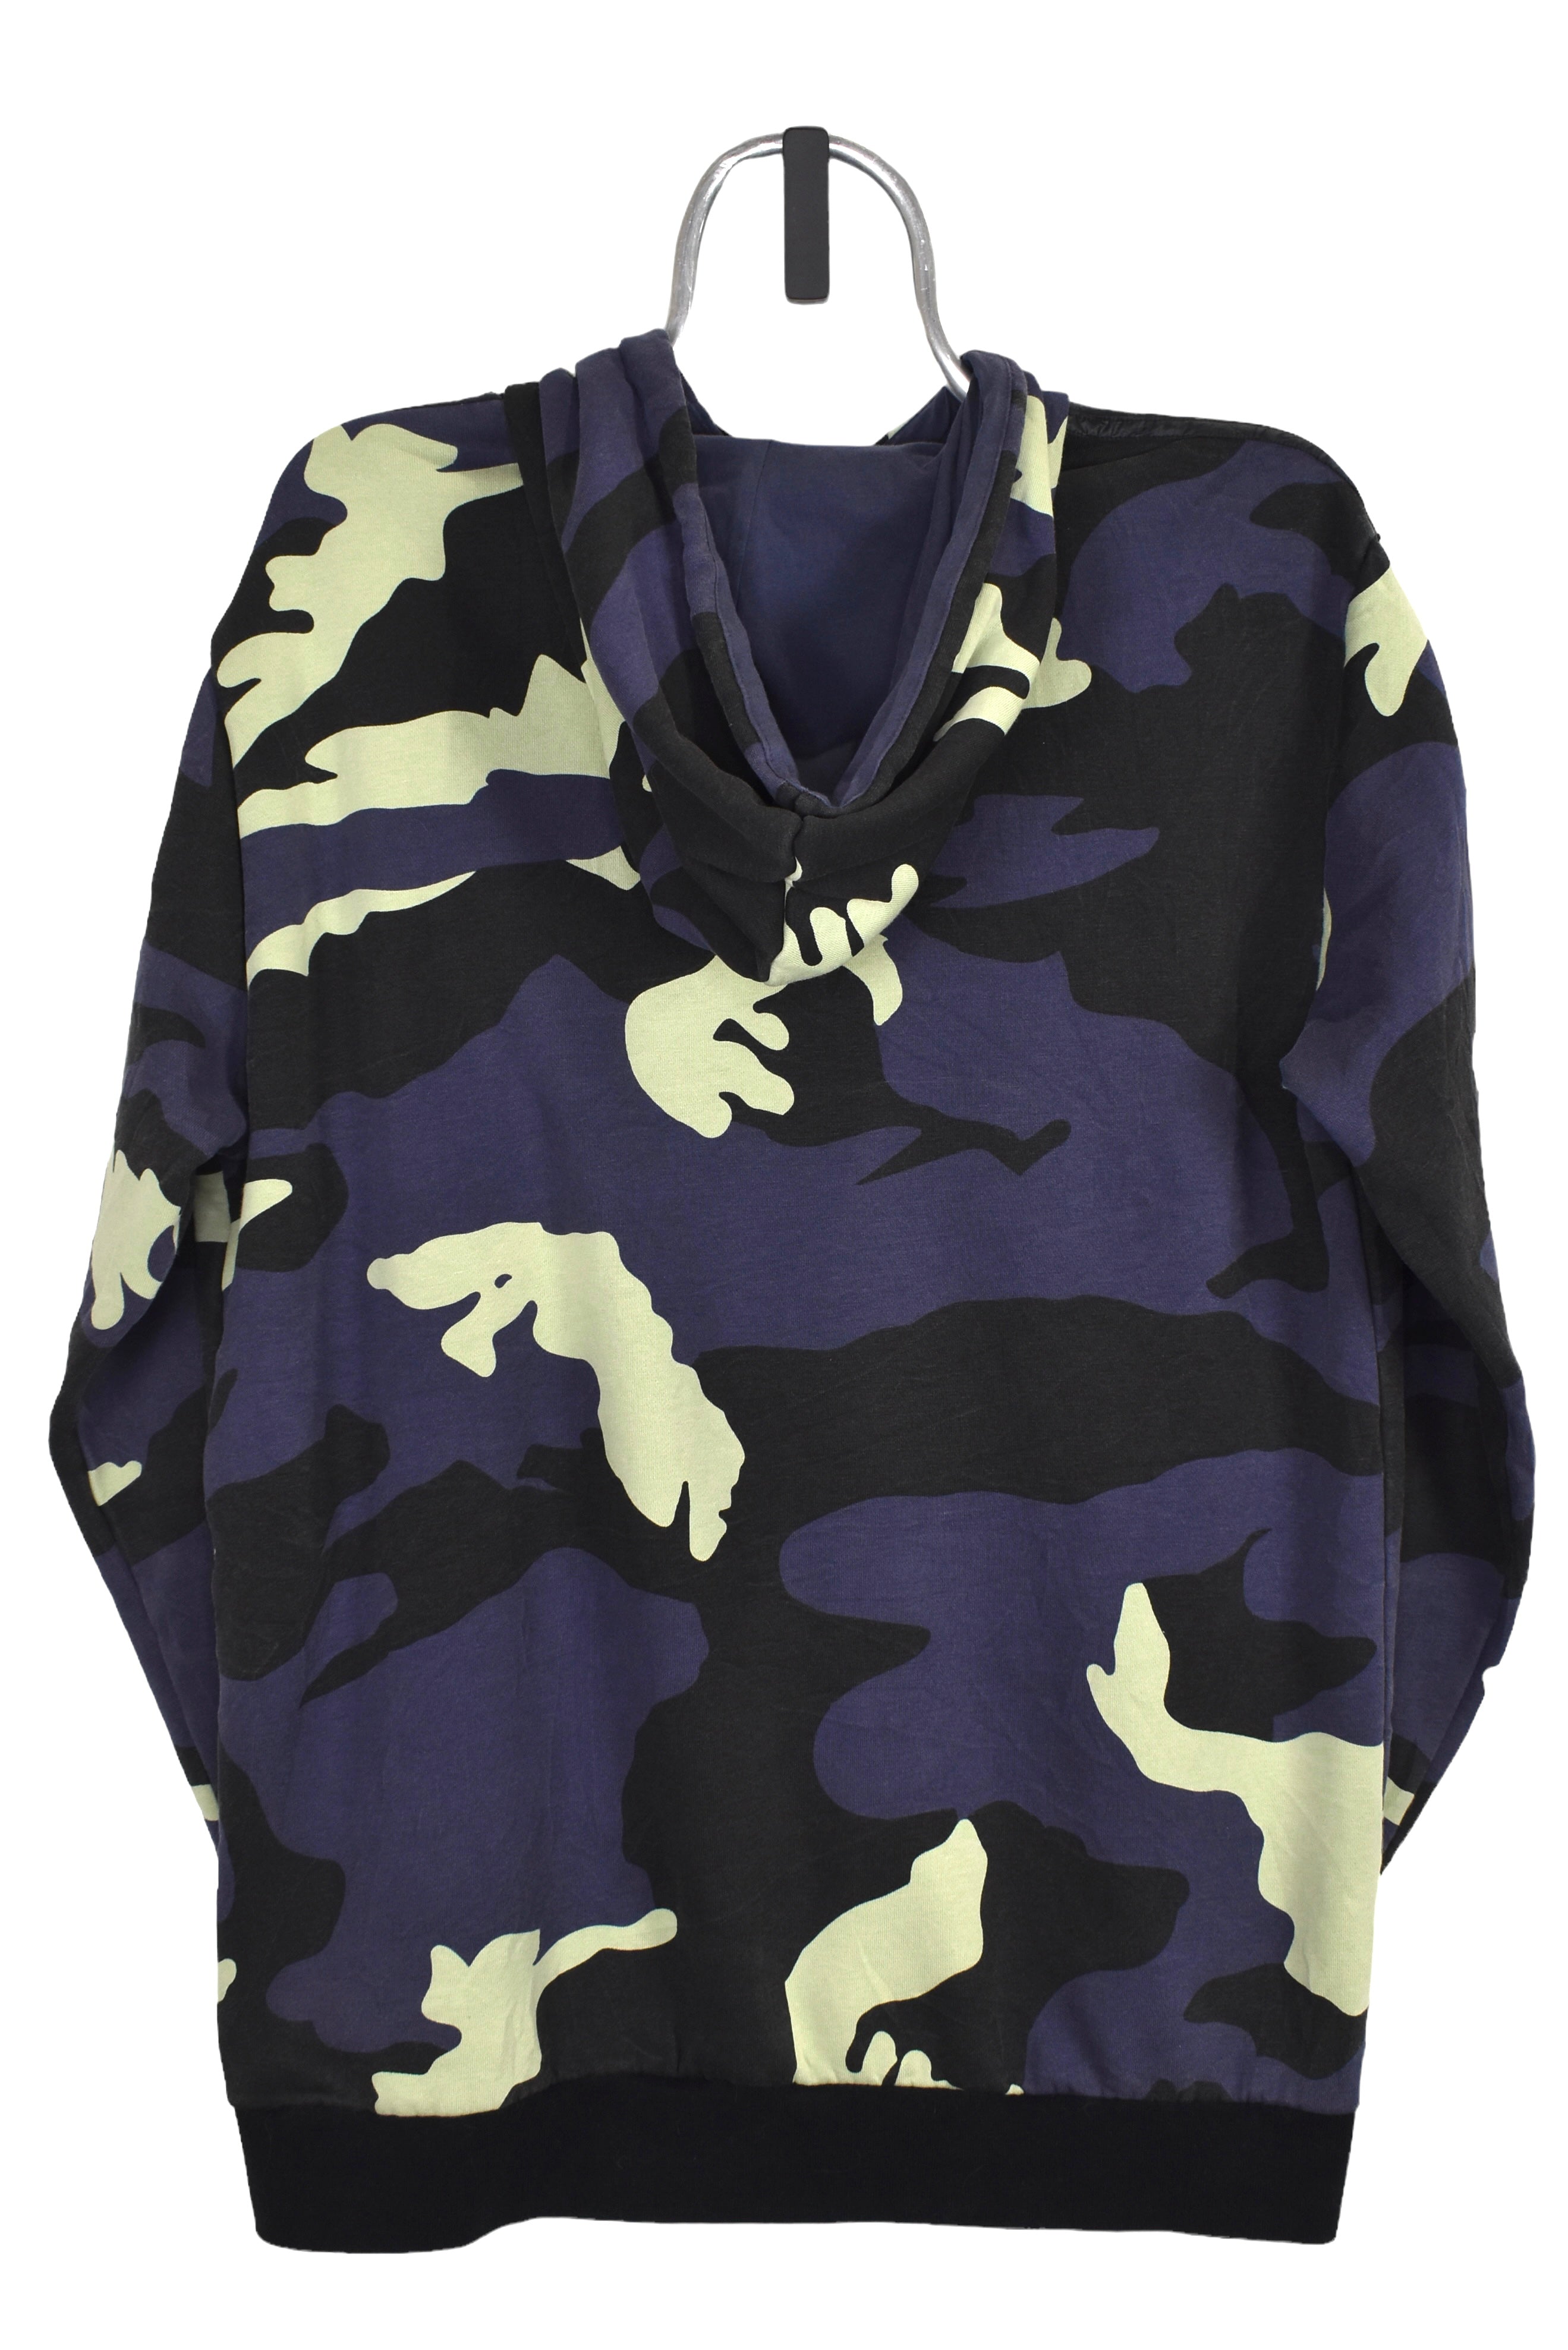 Modern adidas hoodie (L), navy camo graphic sweatshirt